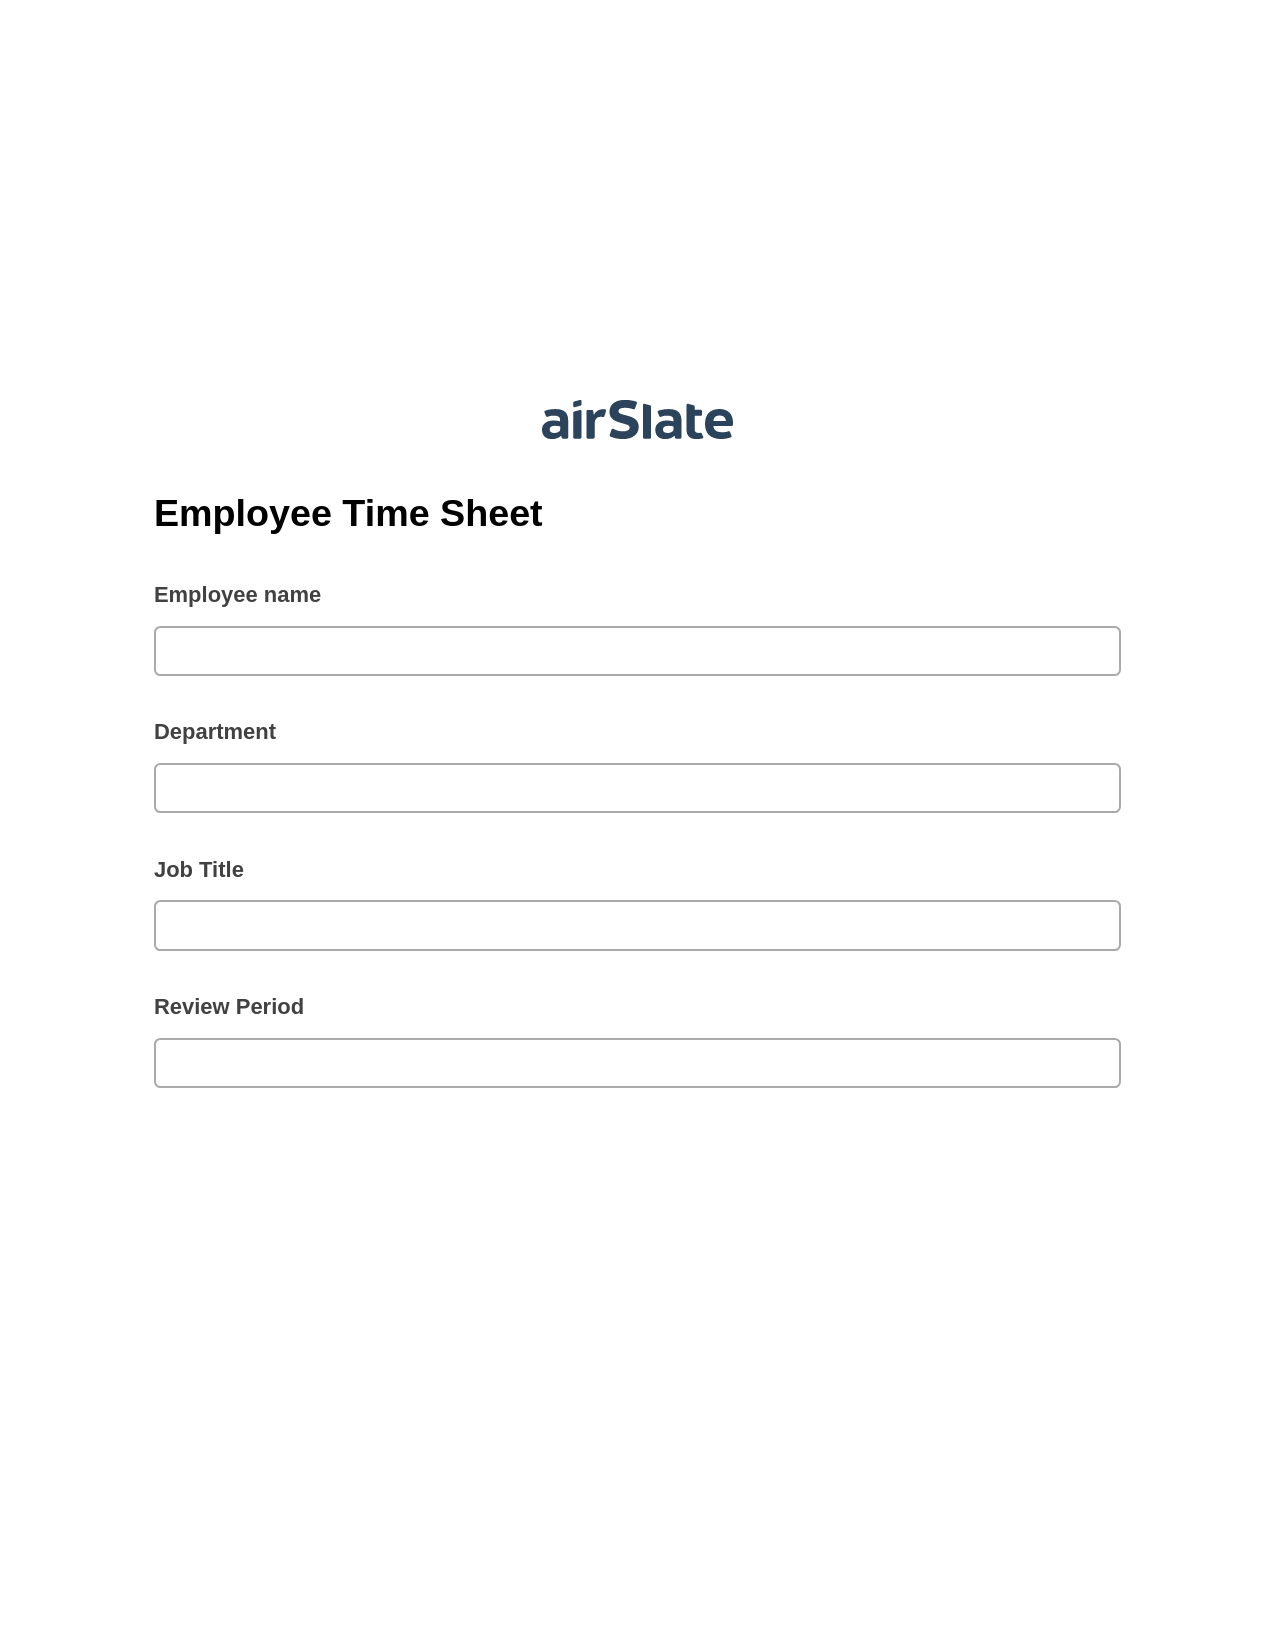 Employee Time Sheet Pre-fill from Smartsheet Bot, Create slate addon, Archive to Dropbox Bot